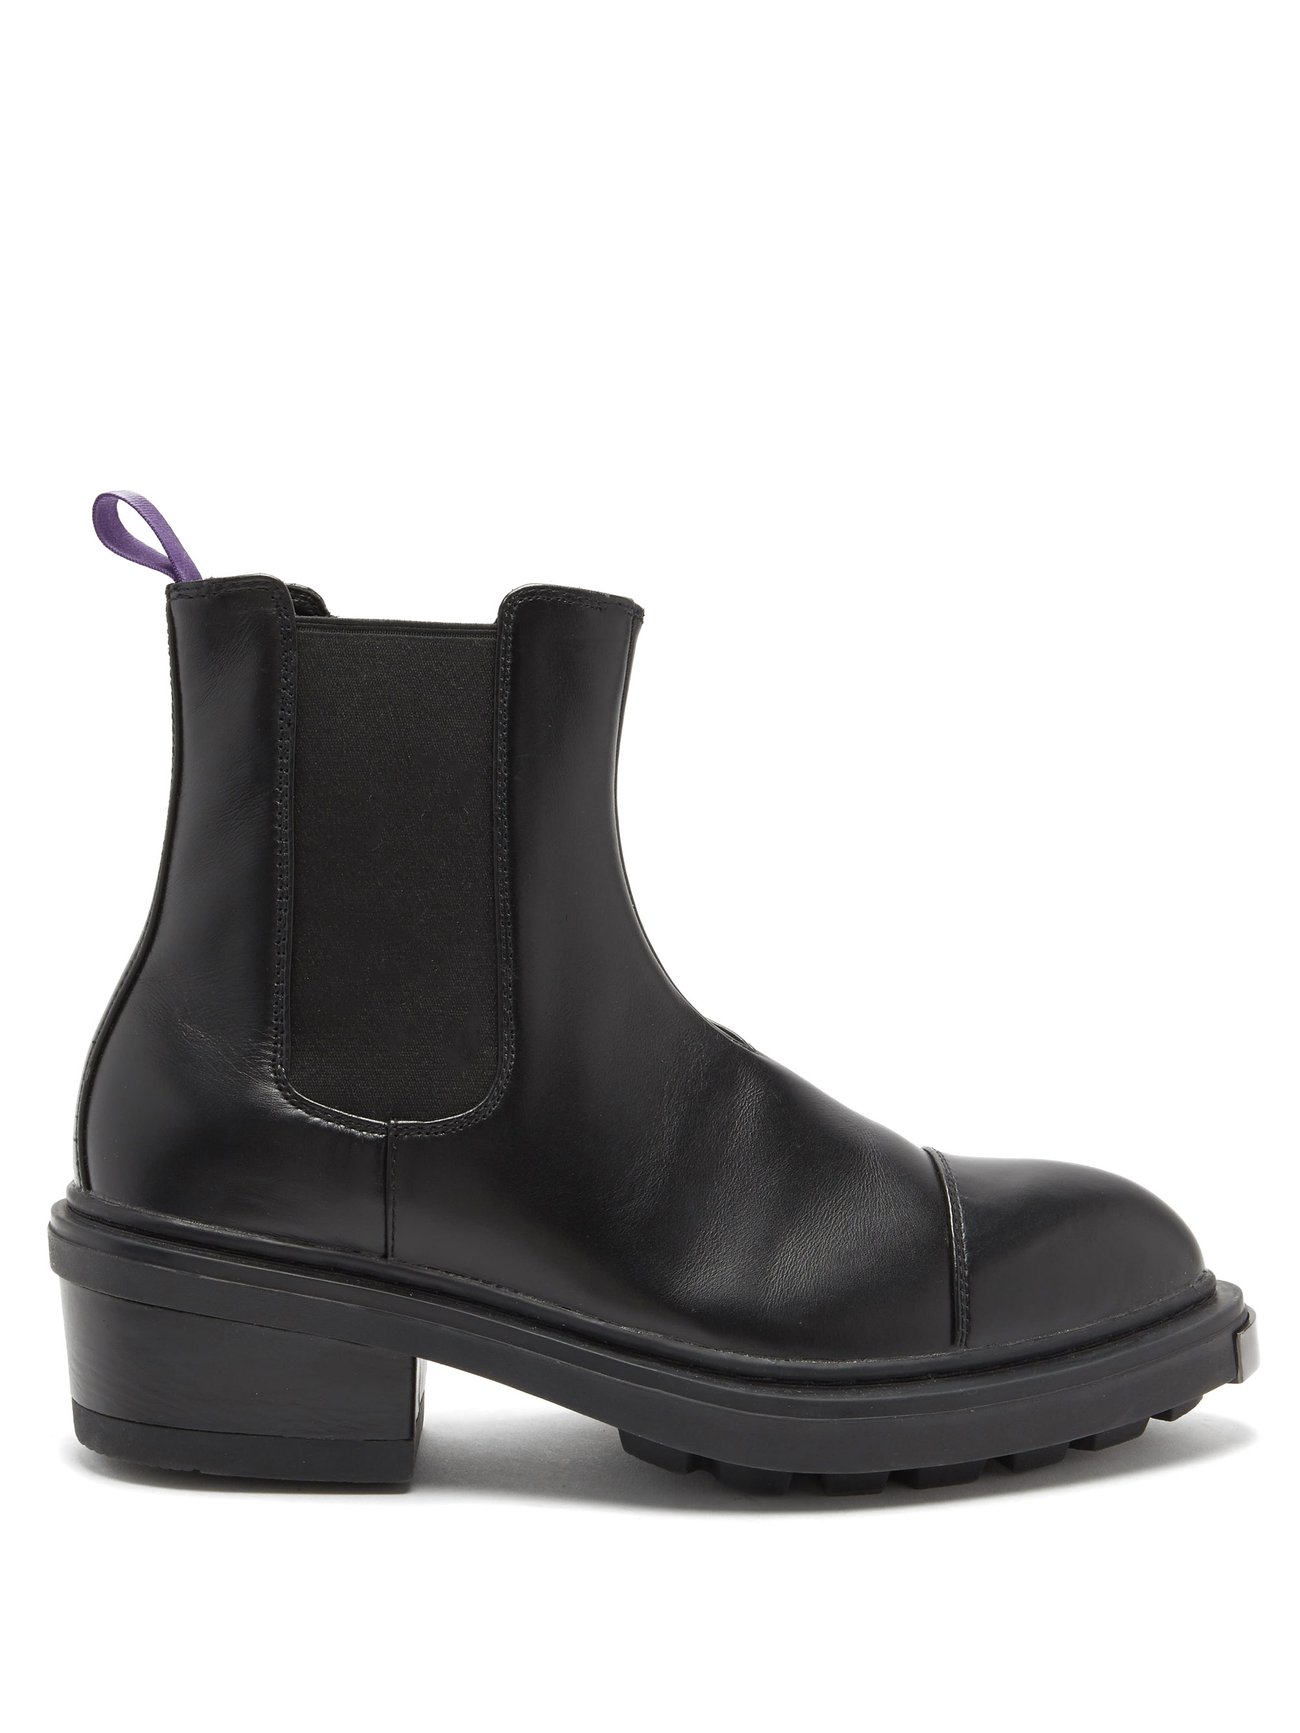 Nikita heeled leather Chelsea boots